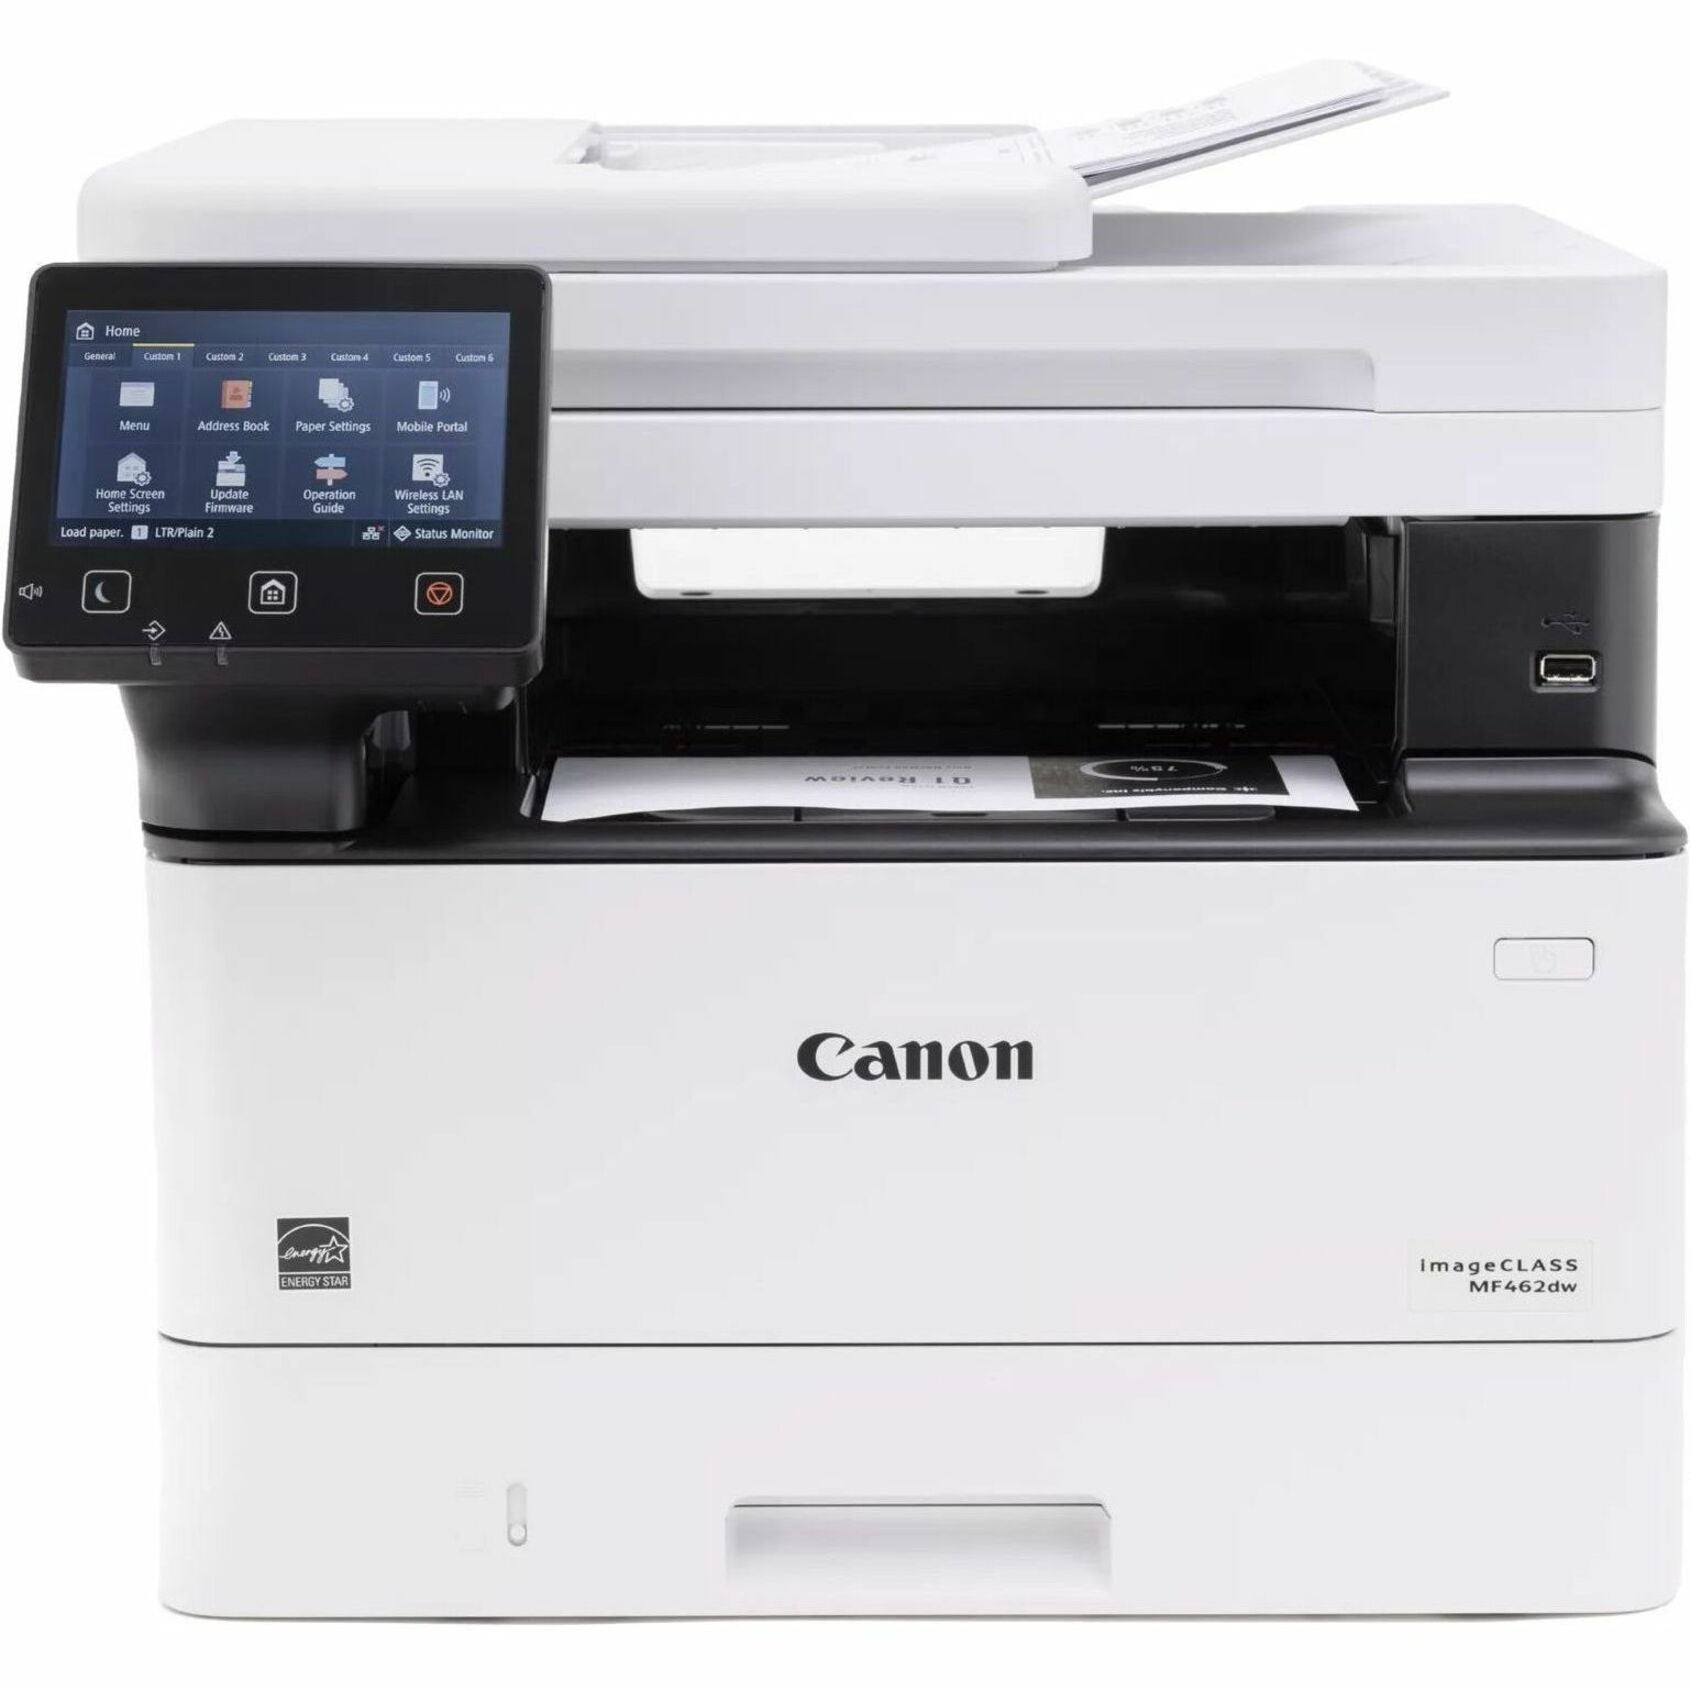 Canon 5951C015 imageCLASS MF462dw All-in-One Wireless Duplex Laser Printer, Monochrome, 37 ppm, 1200 x 1200 dpi